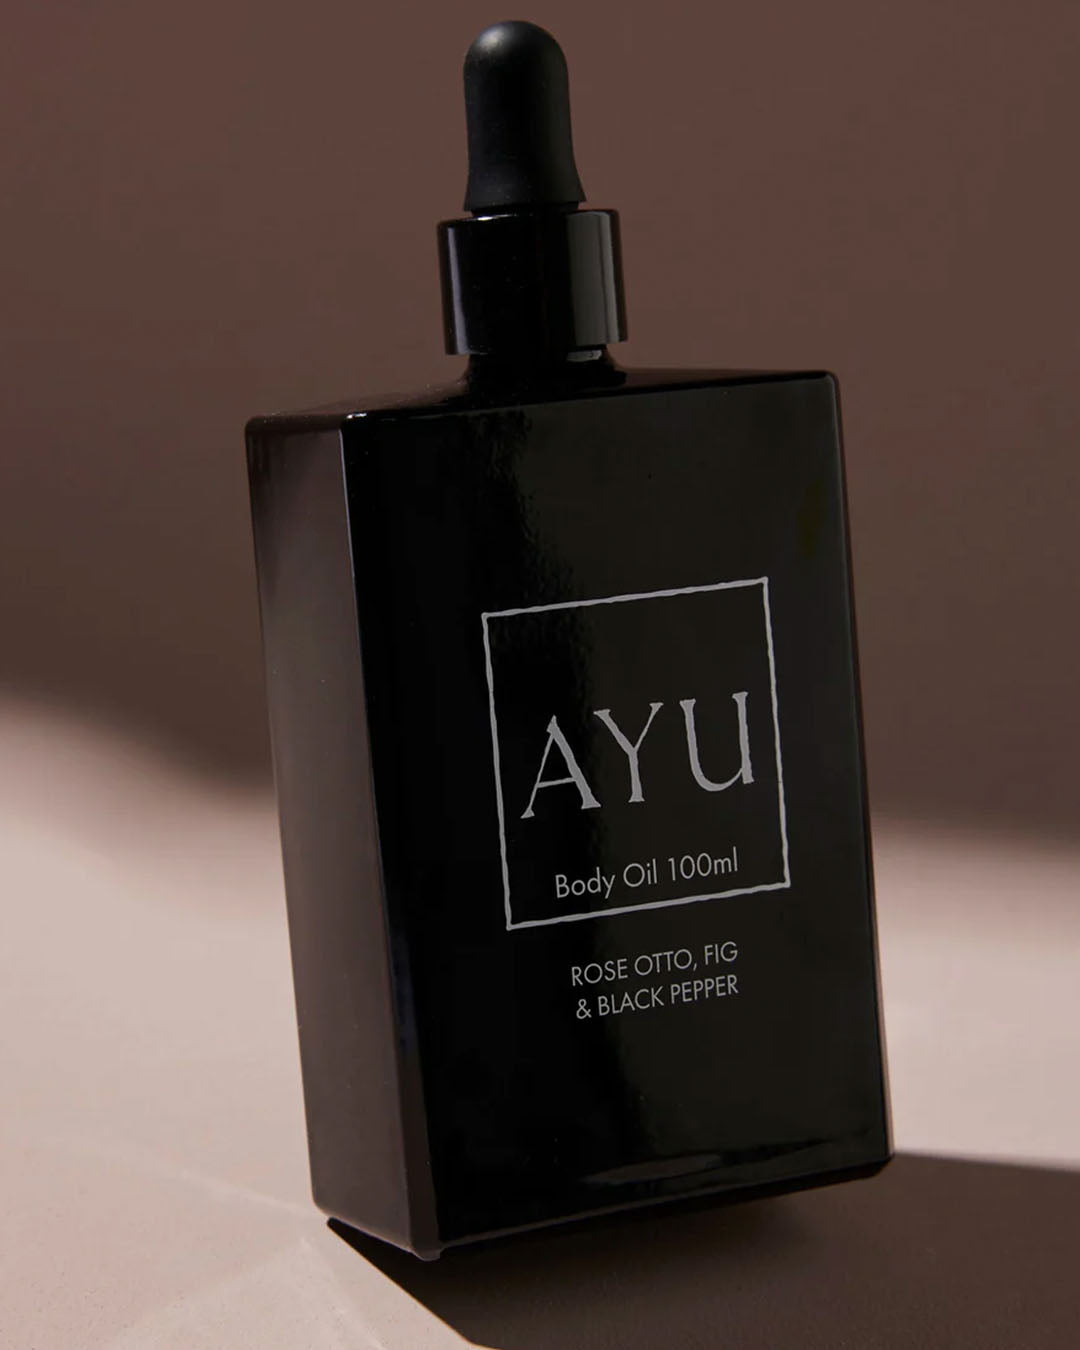 Rose Otto, Fig &amp; Black Pepper Body Oil 100ml Skincare by Ayu - Prae Store